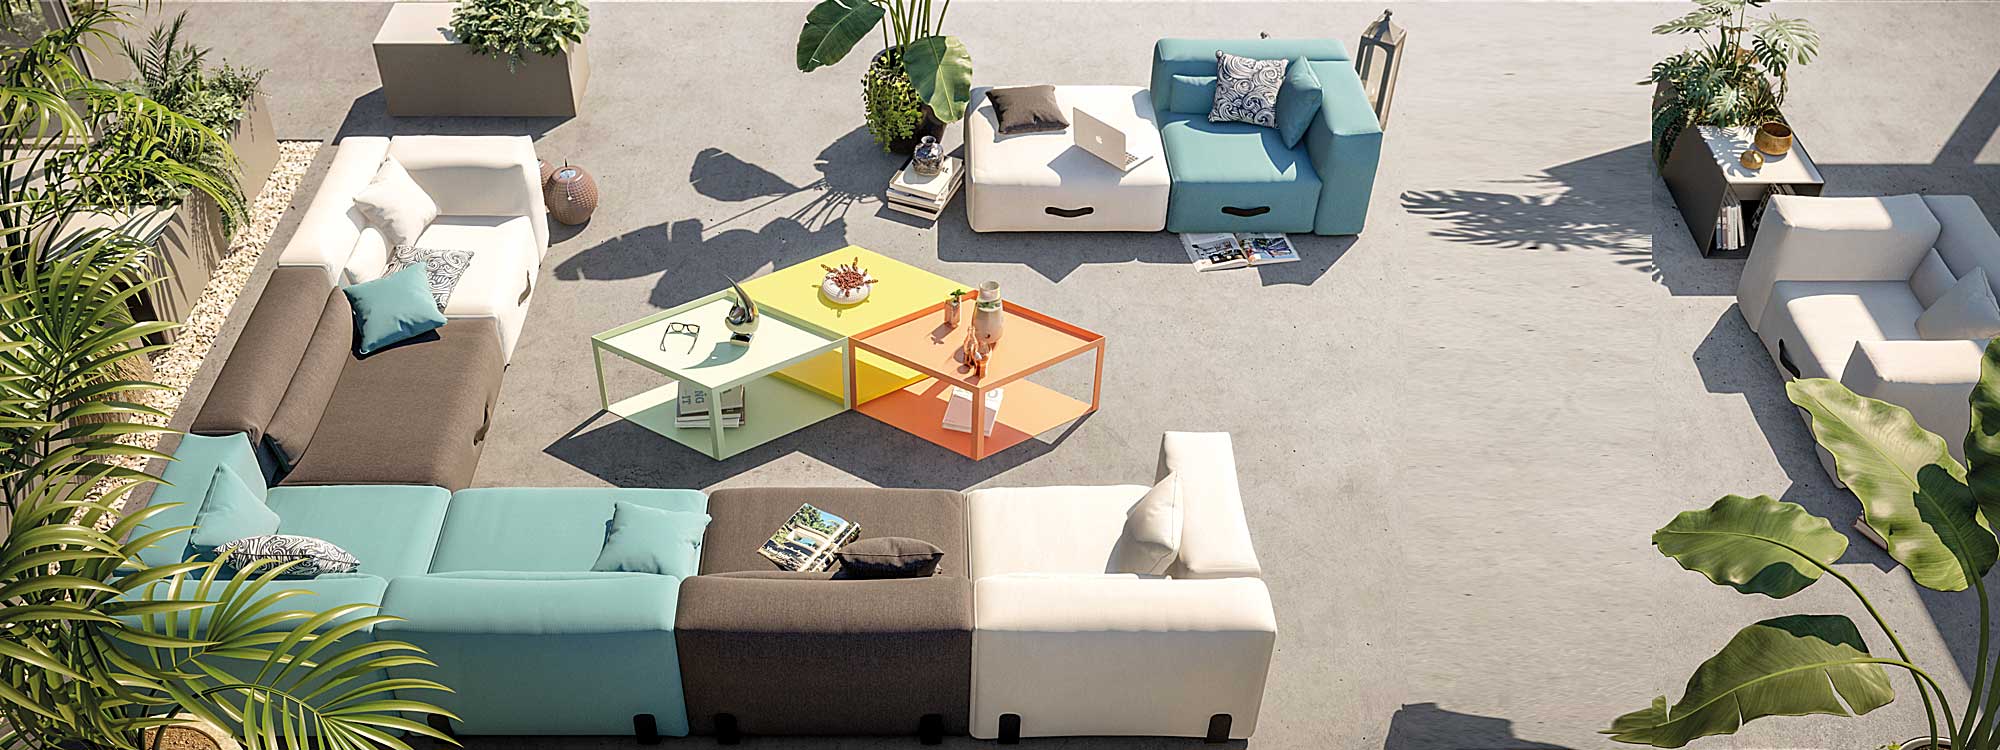 Birdseye view of Miami modular outdoor sofa and Karo modular low tables